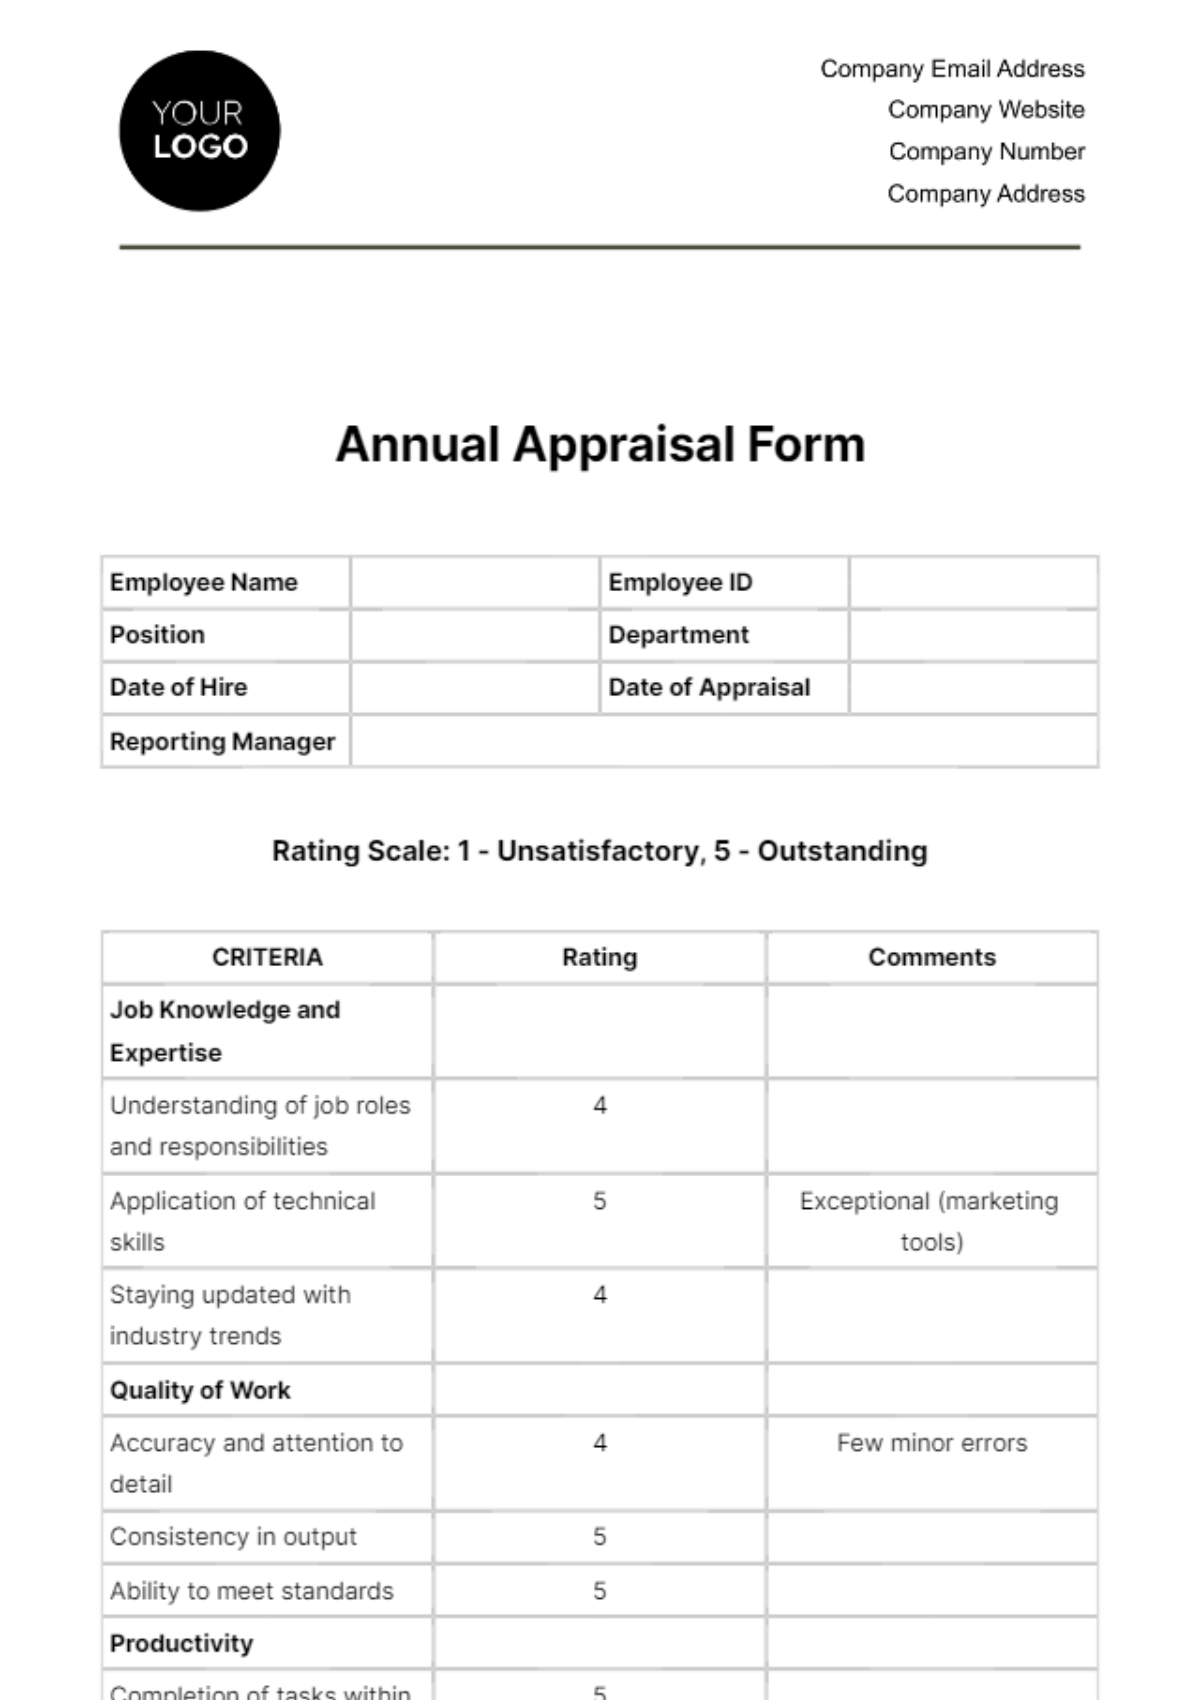 Annual Appraisal Form HR Template